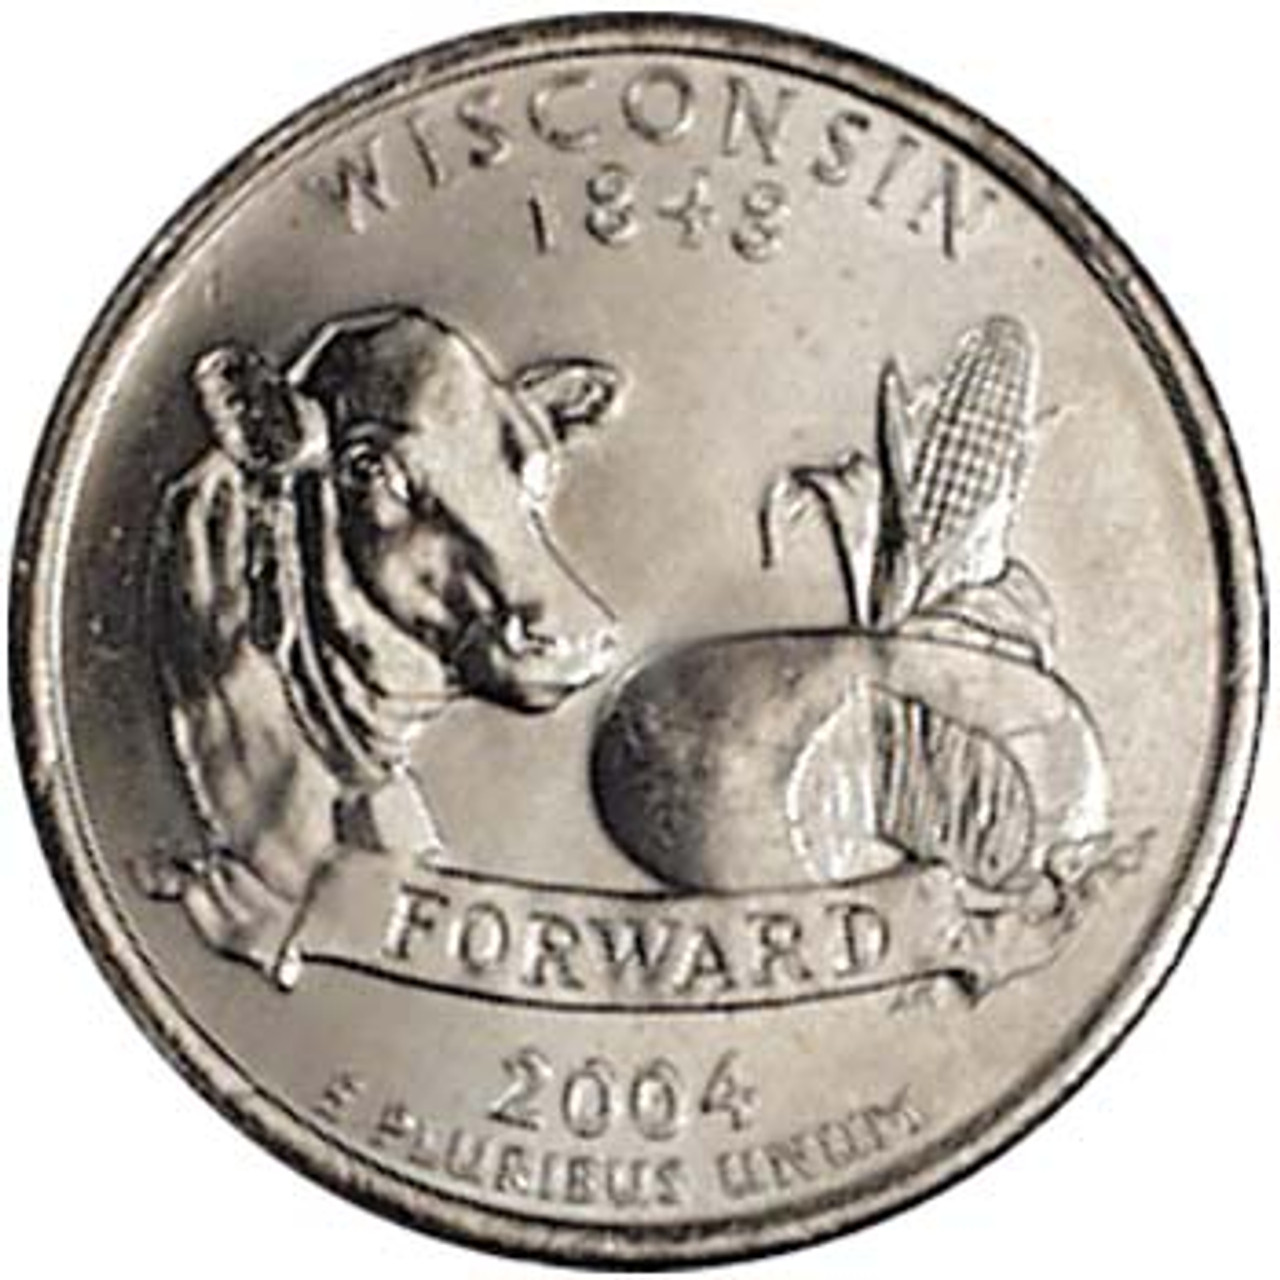 2004-D Wisconsin Quarter Brilliant Uncirculated Image 1